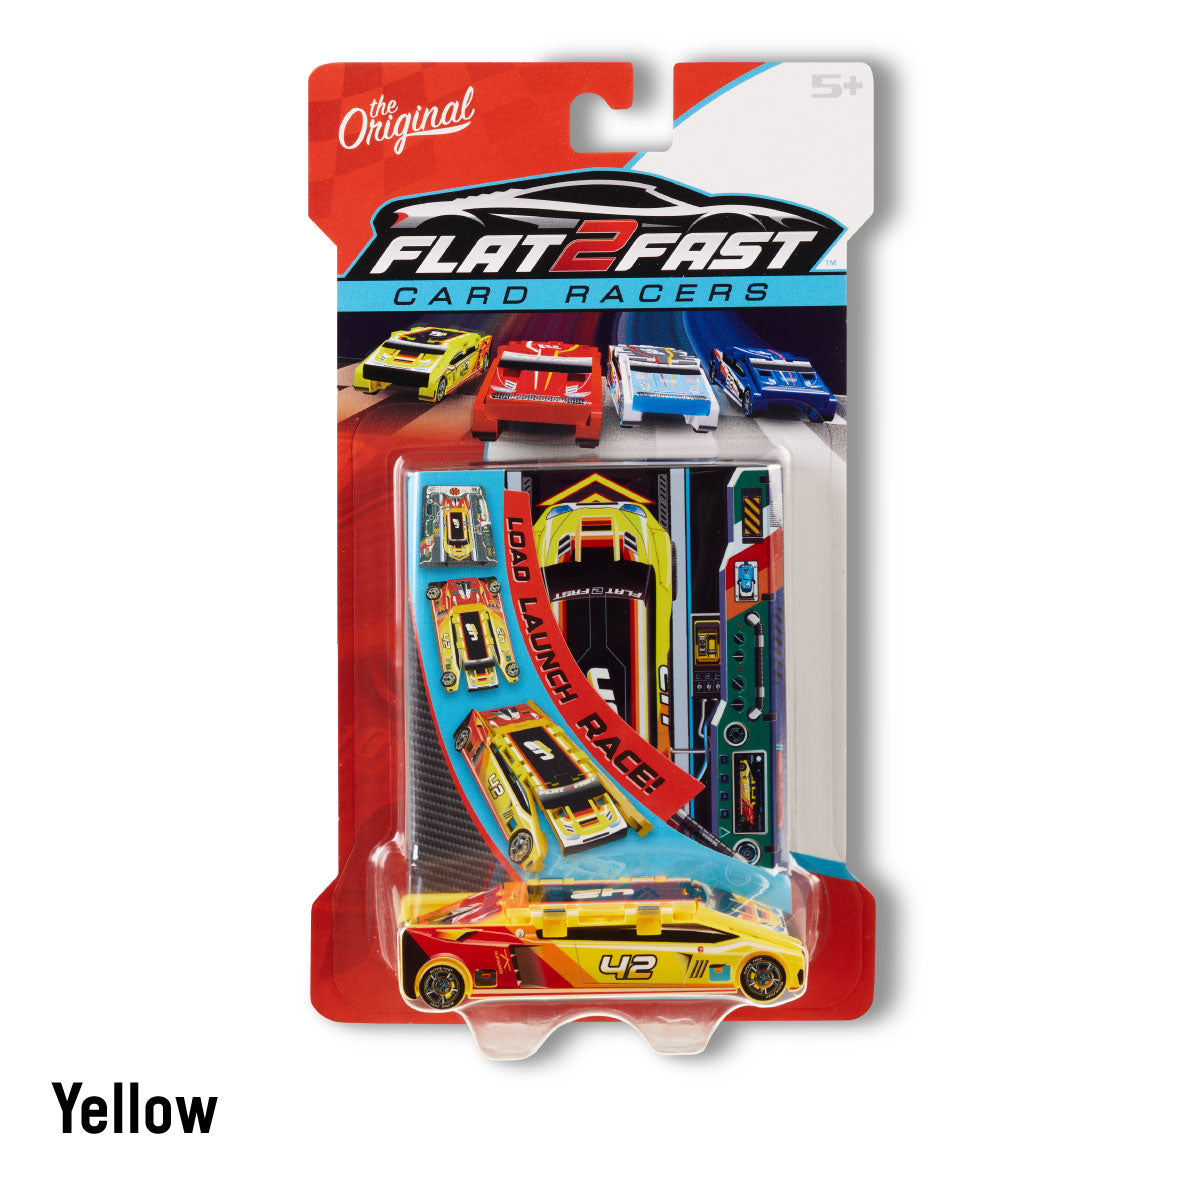 Luki Lab Flat 2 Fast Card Racers Yellow Race Car